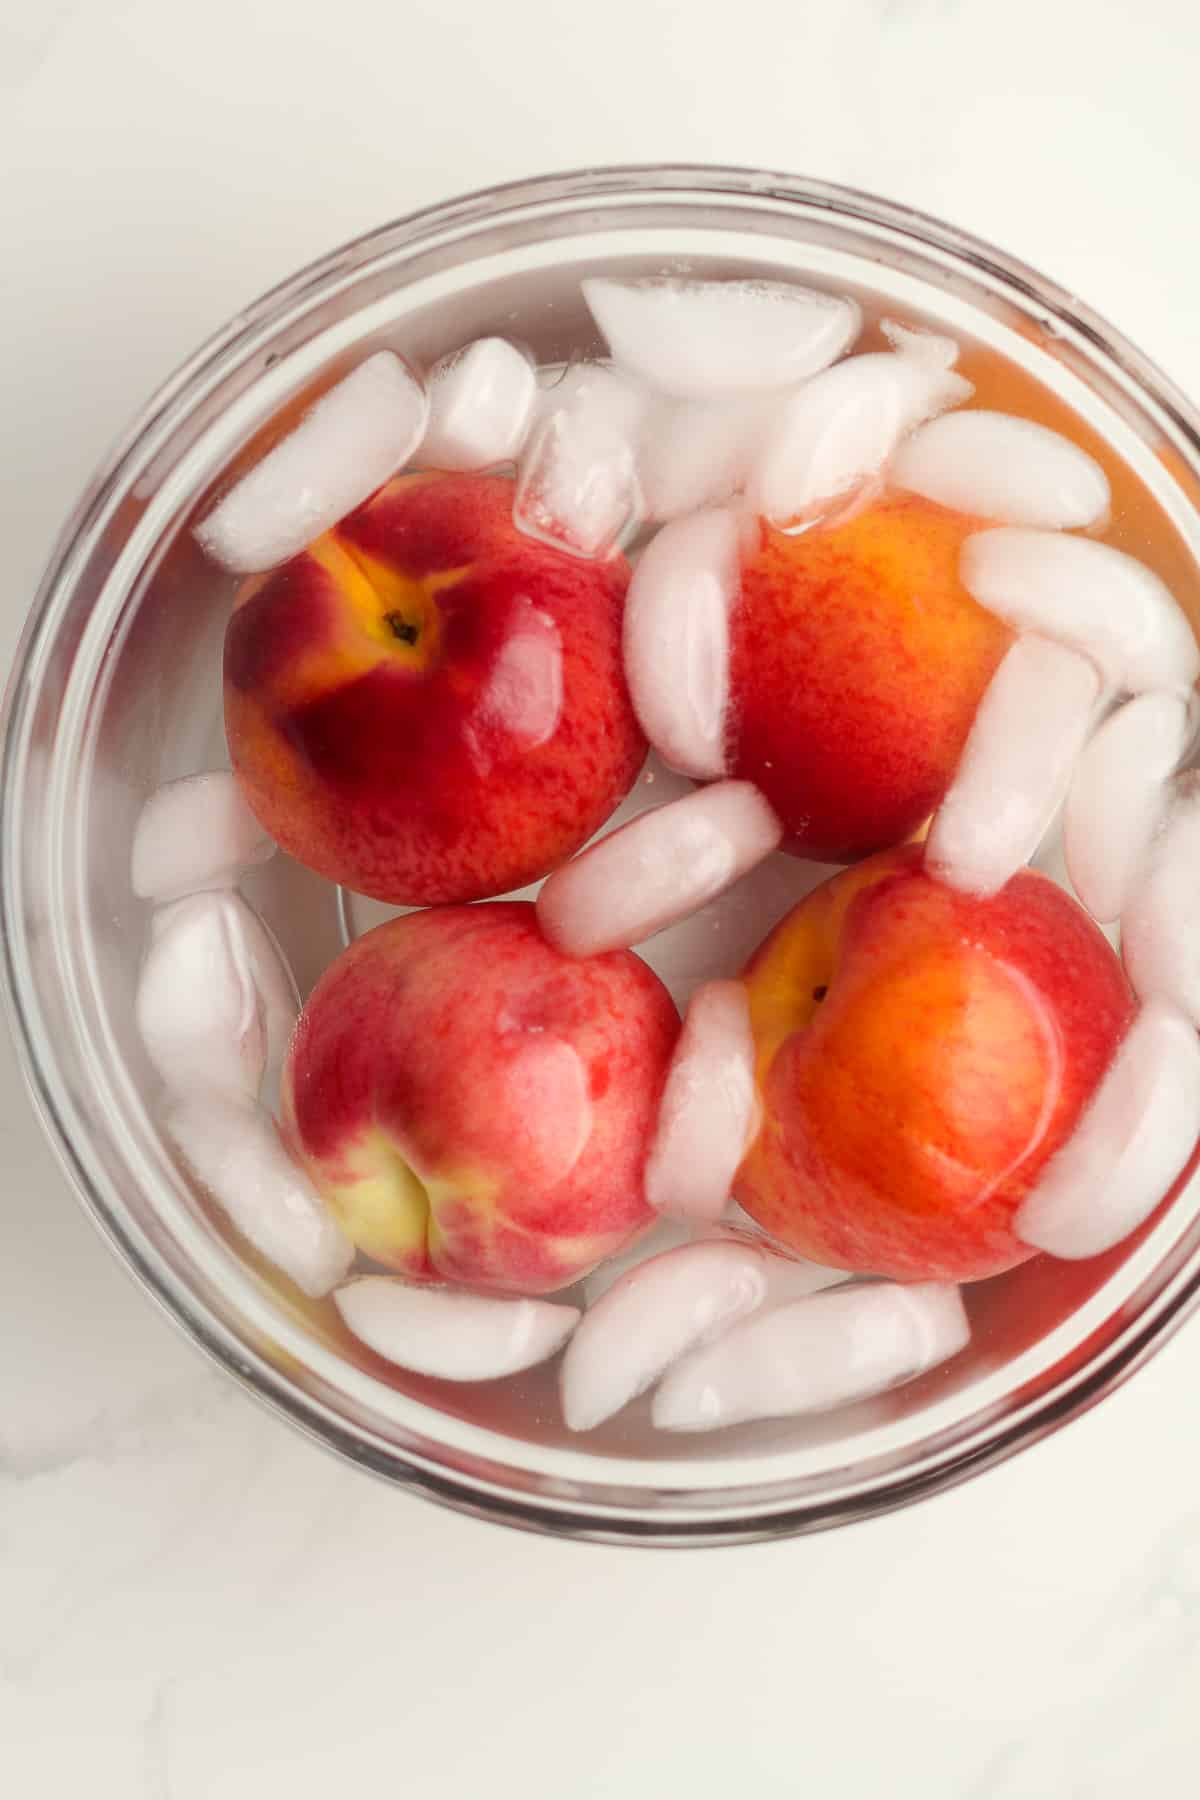 A glass bowl of peaches in an ice bath.